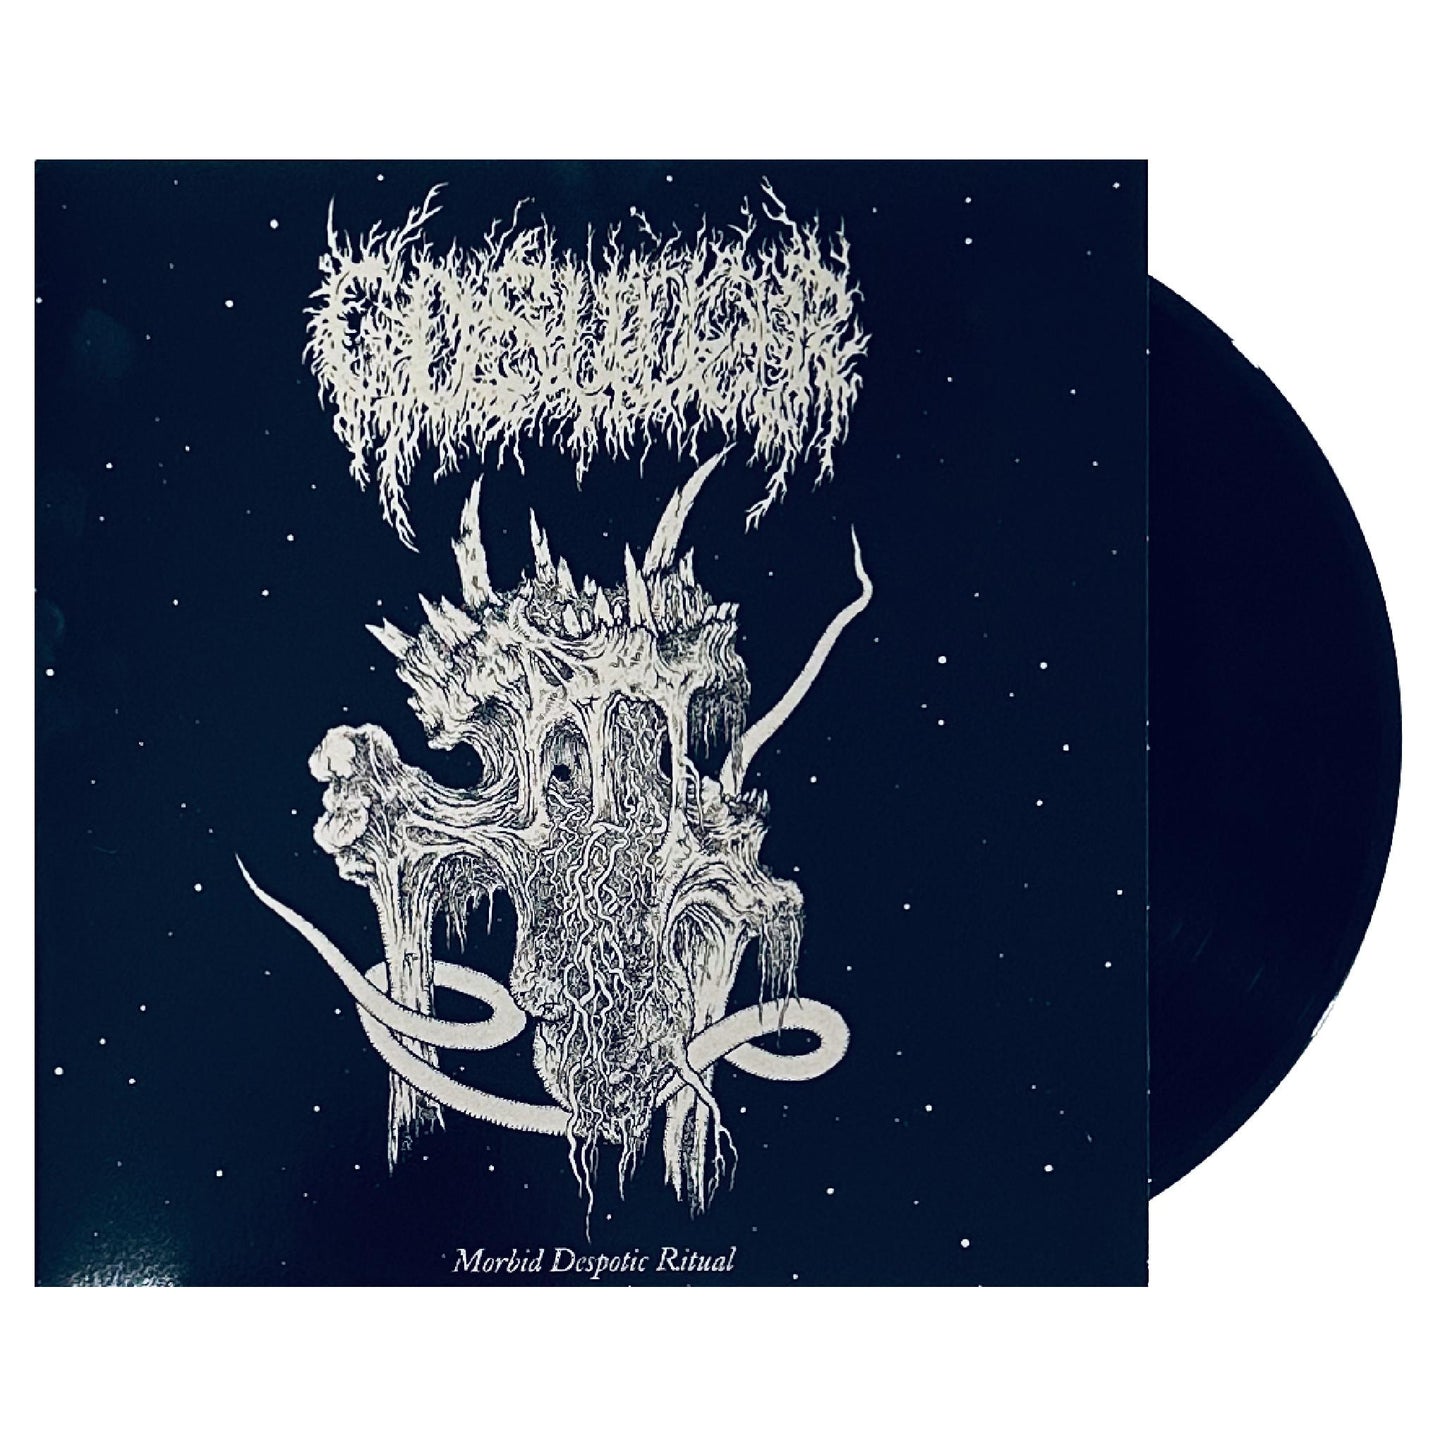 Gosudar - Morbid Despotic Ritual LP LP 12" (black vinyl)